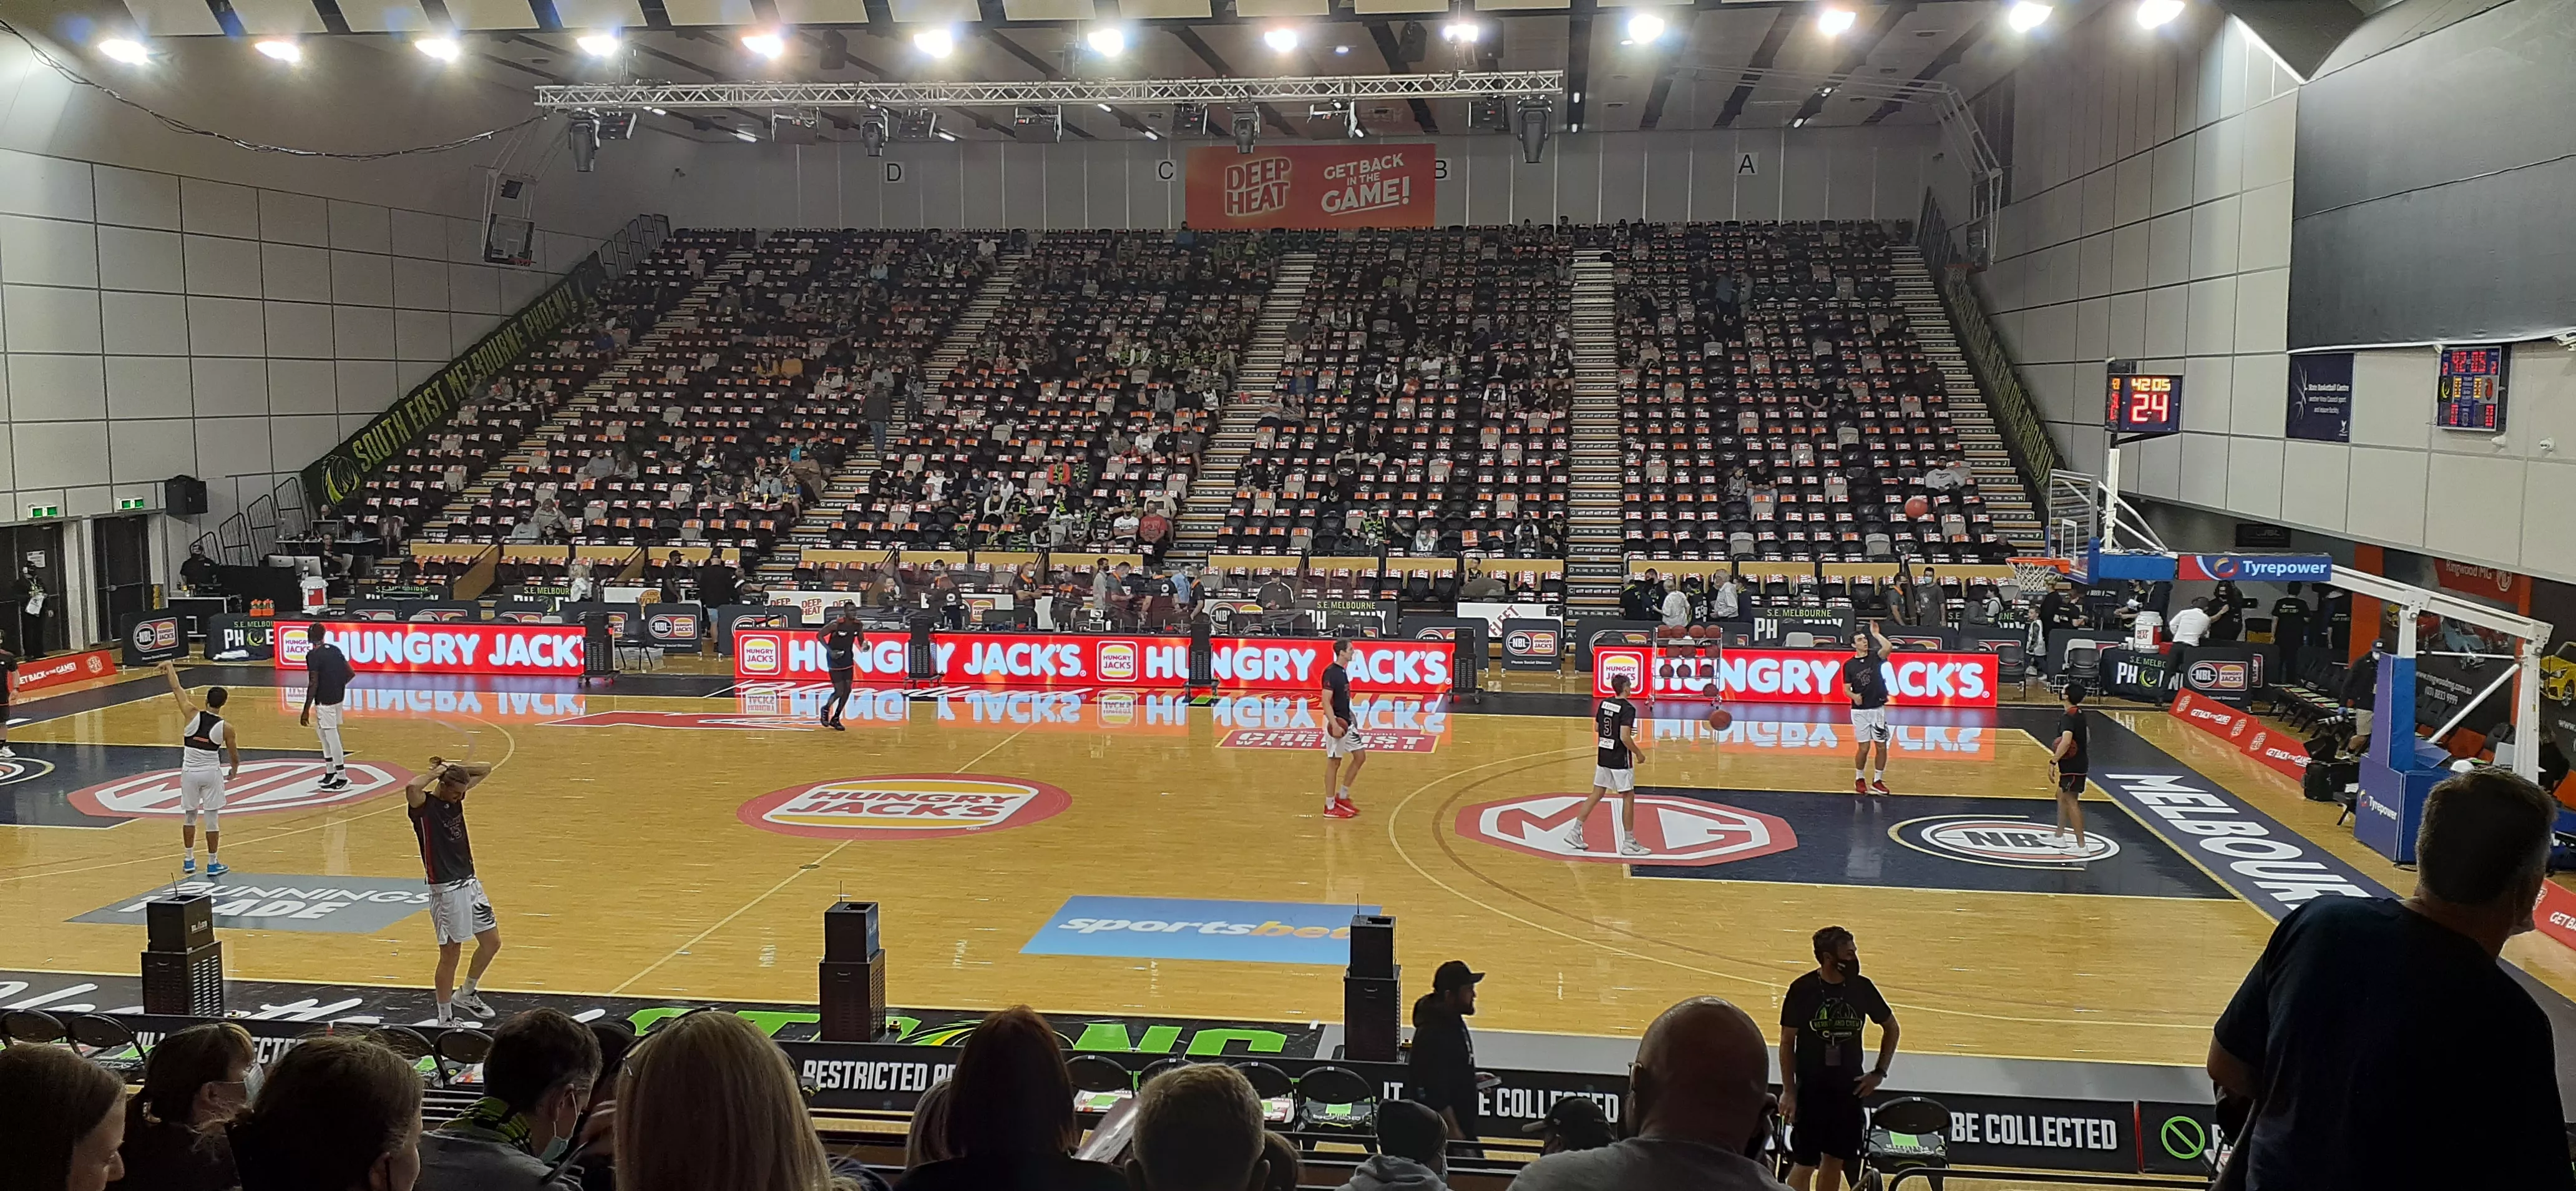 Townsville RSL Stadium in Australia, Australia and Oceania | Basketball - Rated 0.8